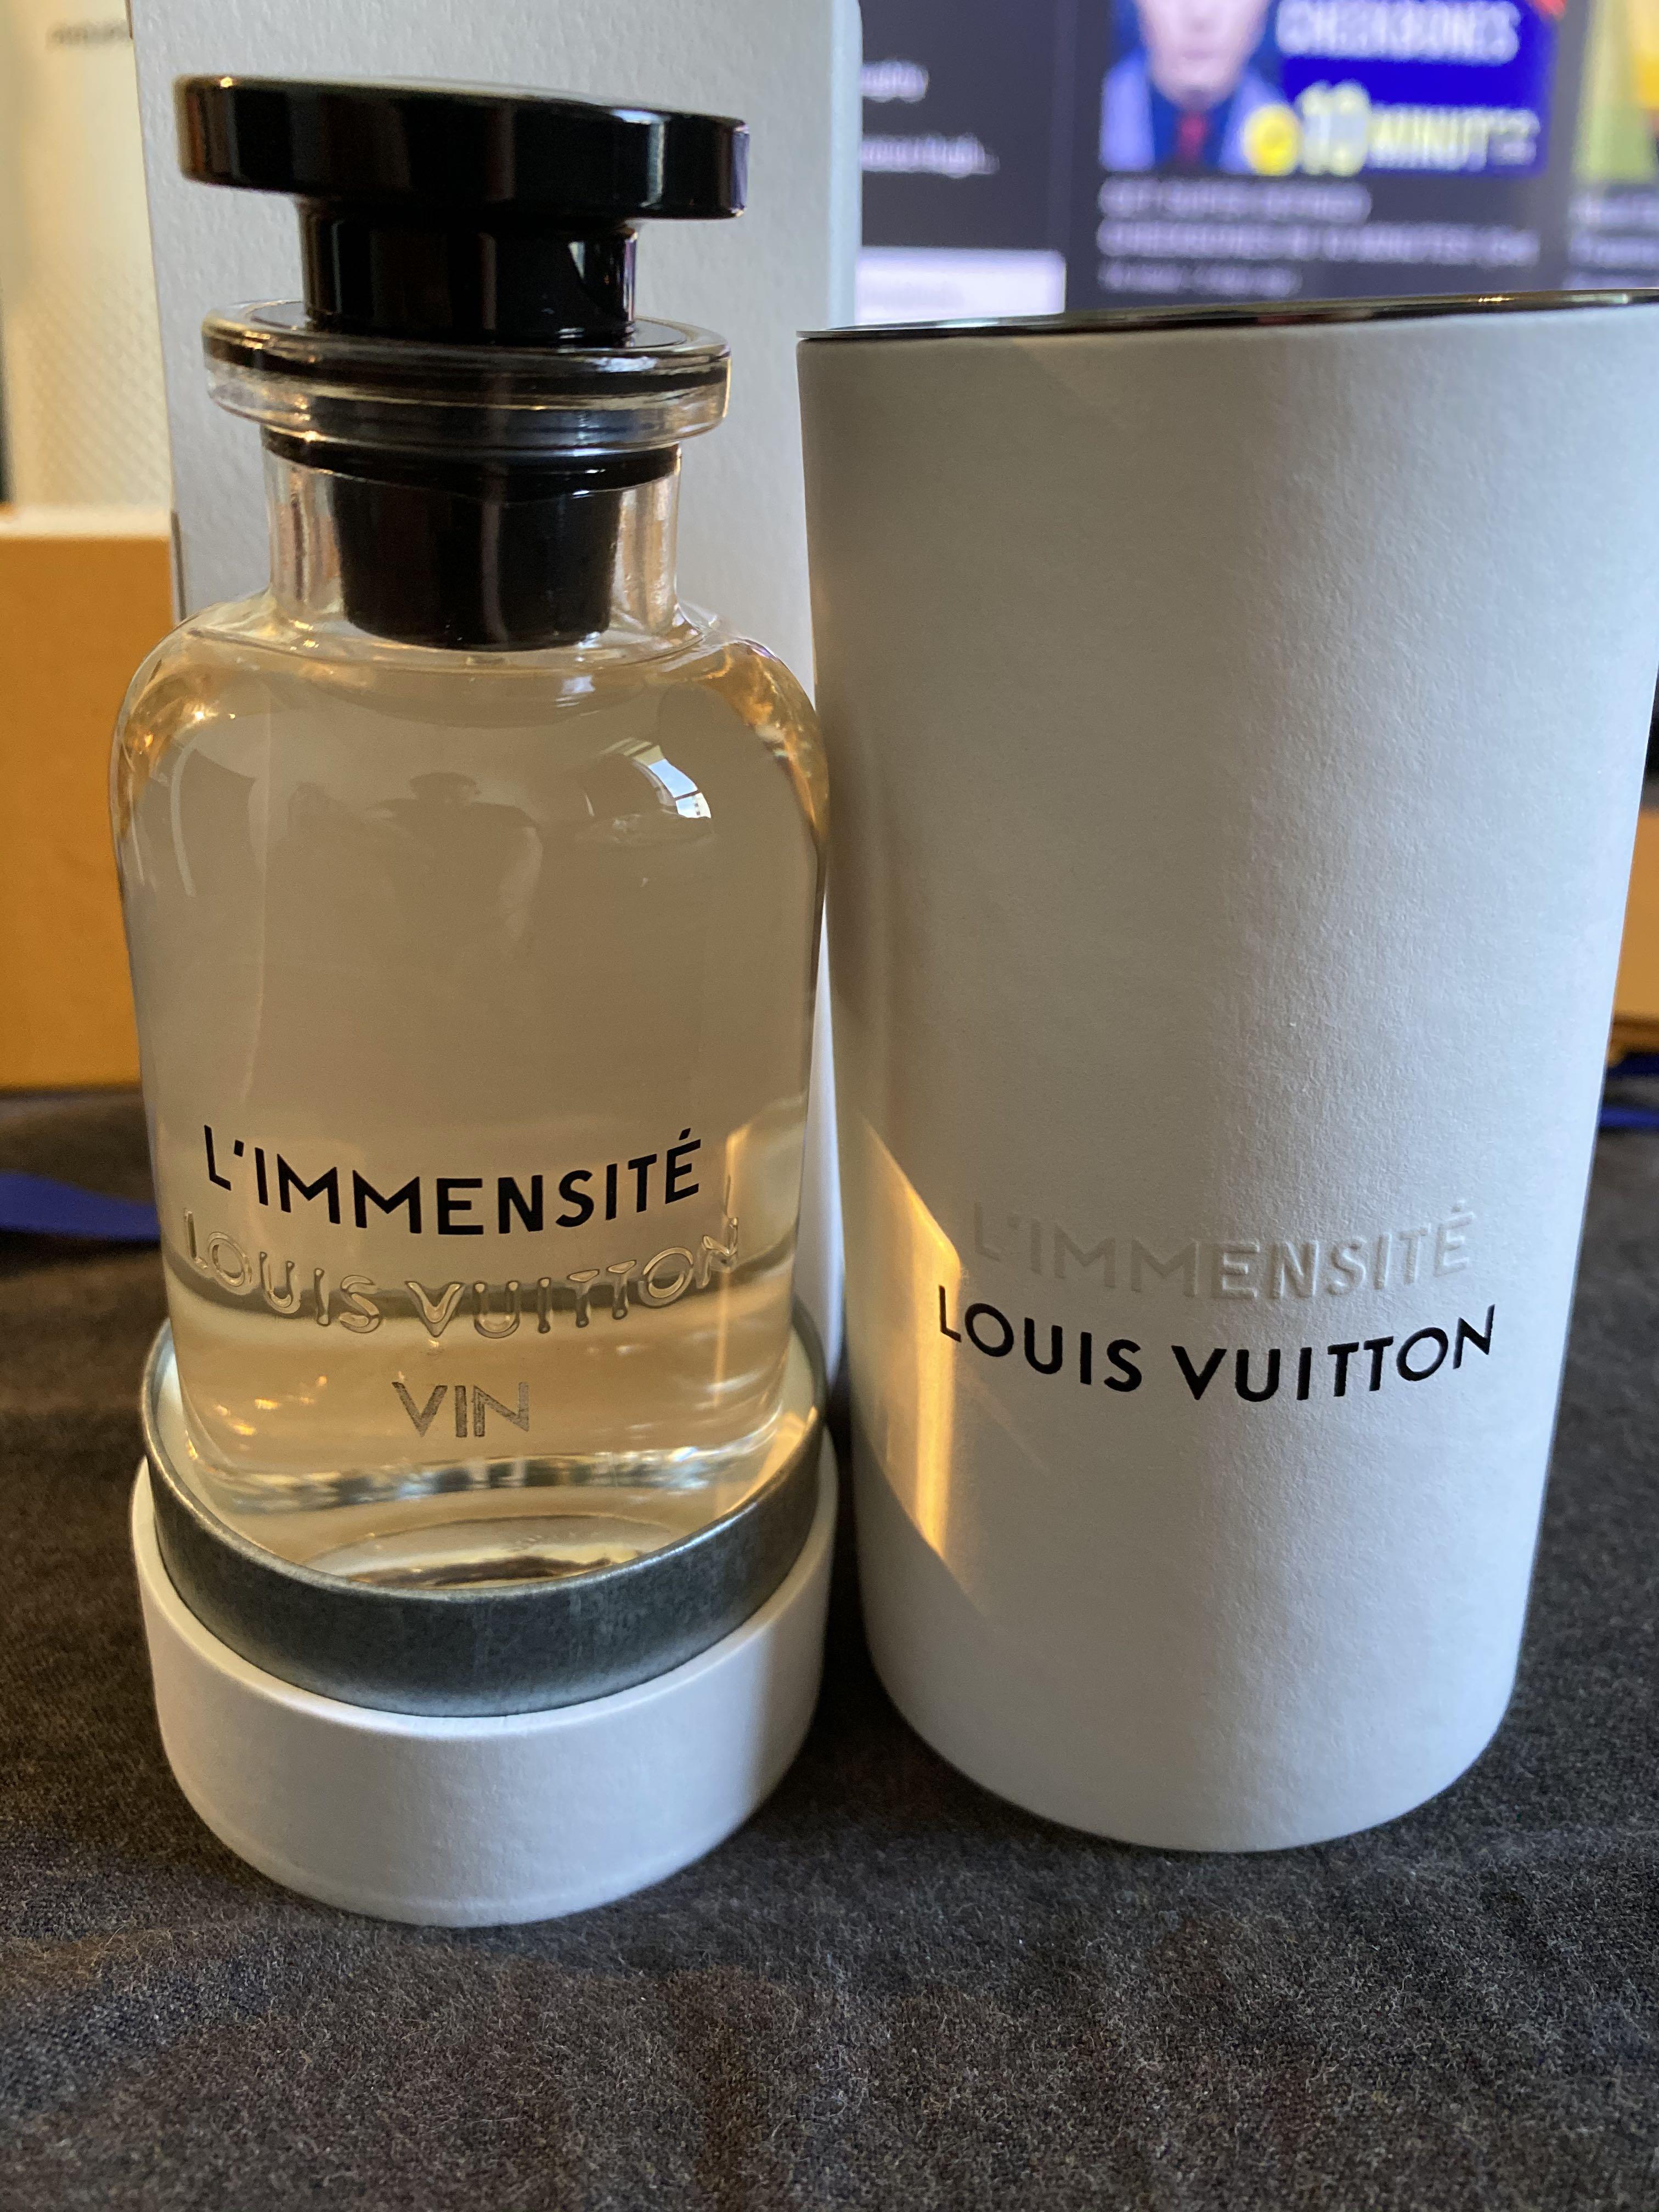 Louis Vuitton L'Immensite Cologne on Mercari